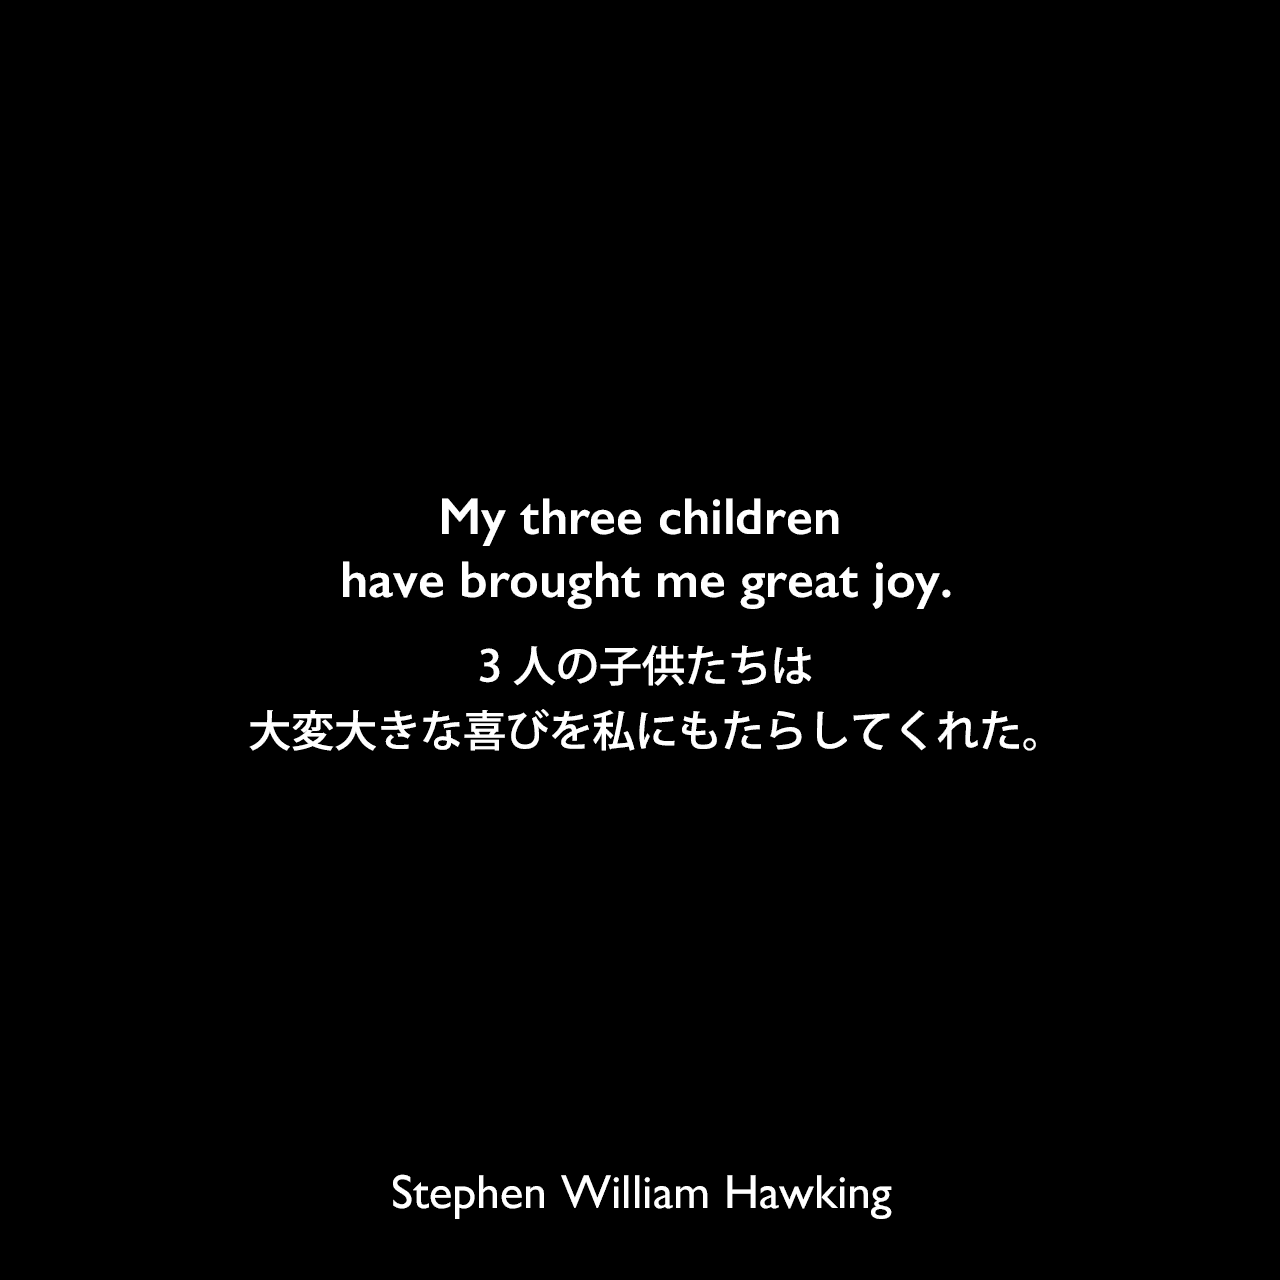 My three children have brought me great joy.3人の子供たちは大変大きな喜びを私にもたらしてくれた。Stephen William Hawking